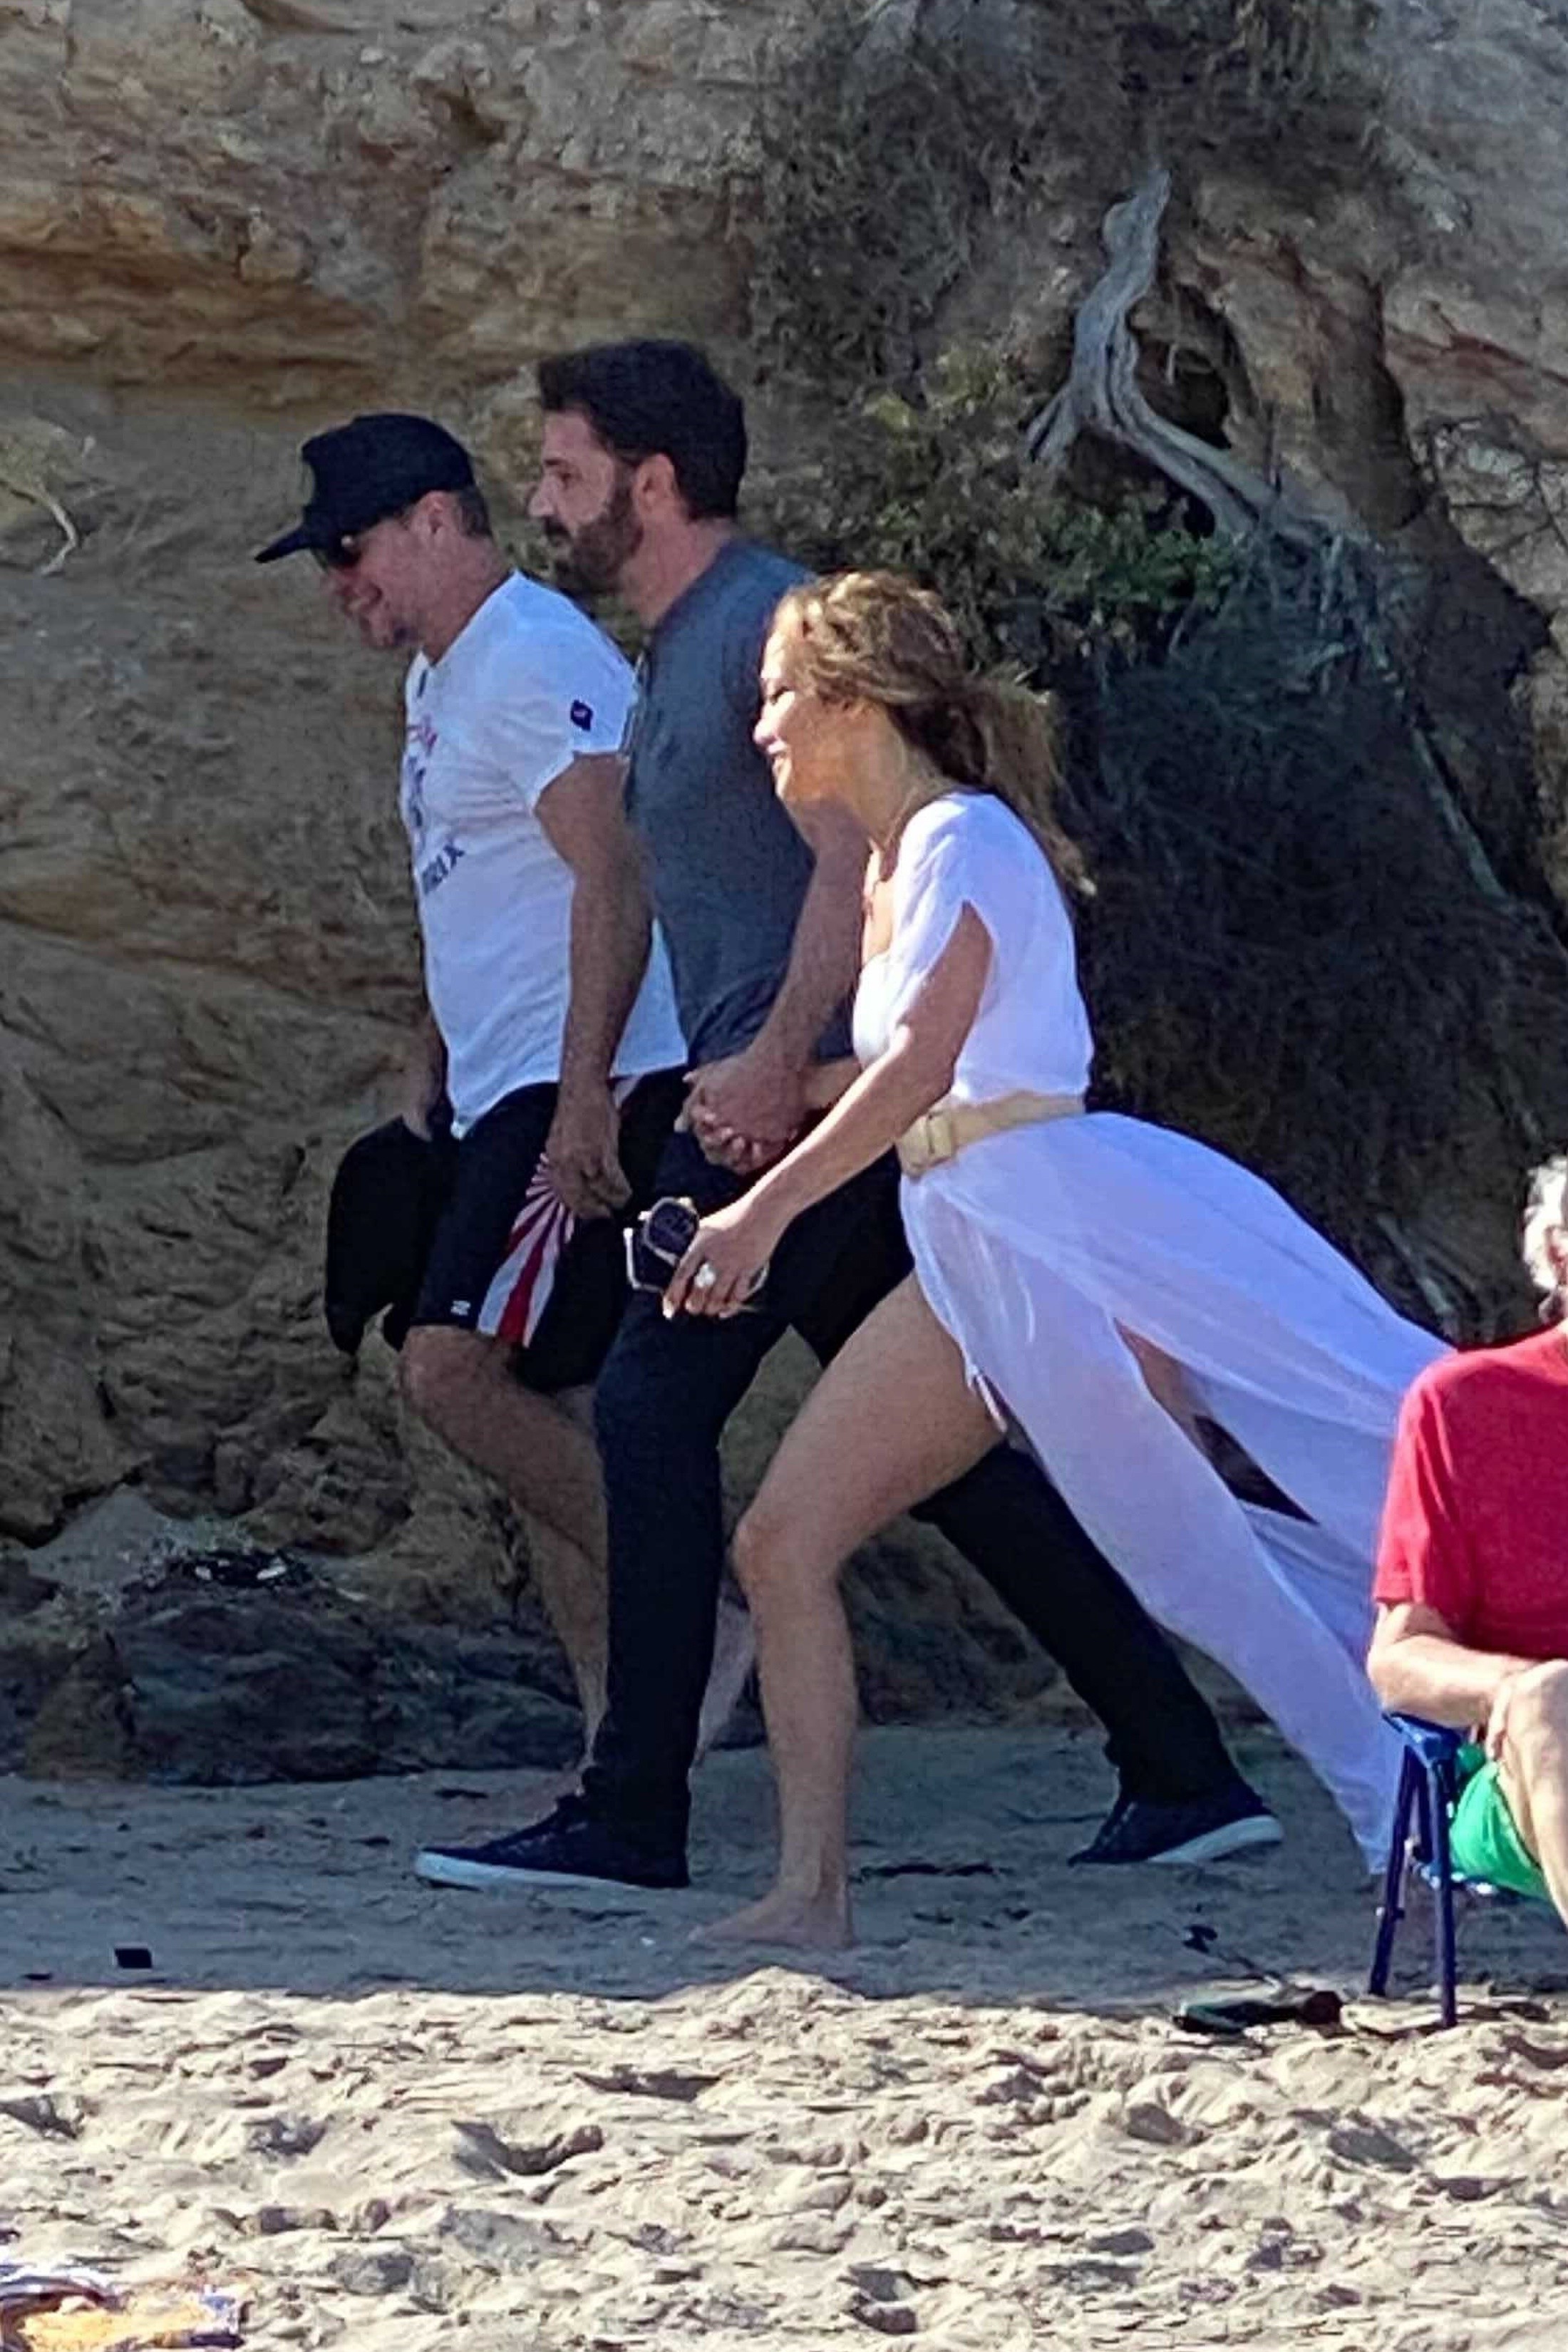 Matt Damon, Ben Affleck e Jennifer Lopez passaram o dia juntos em praia na Califórnia (Foto: The Grosby Group)